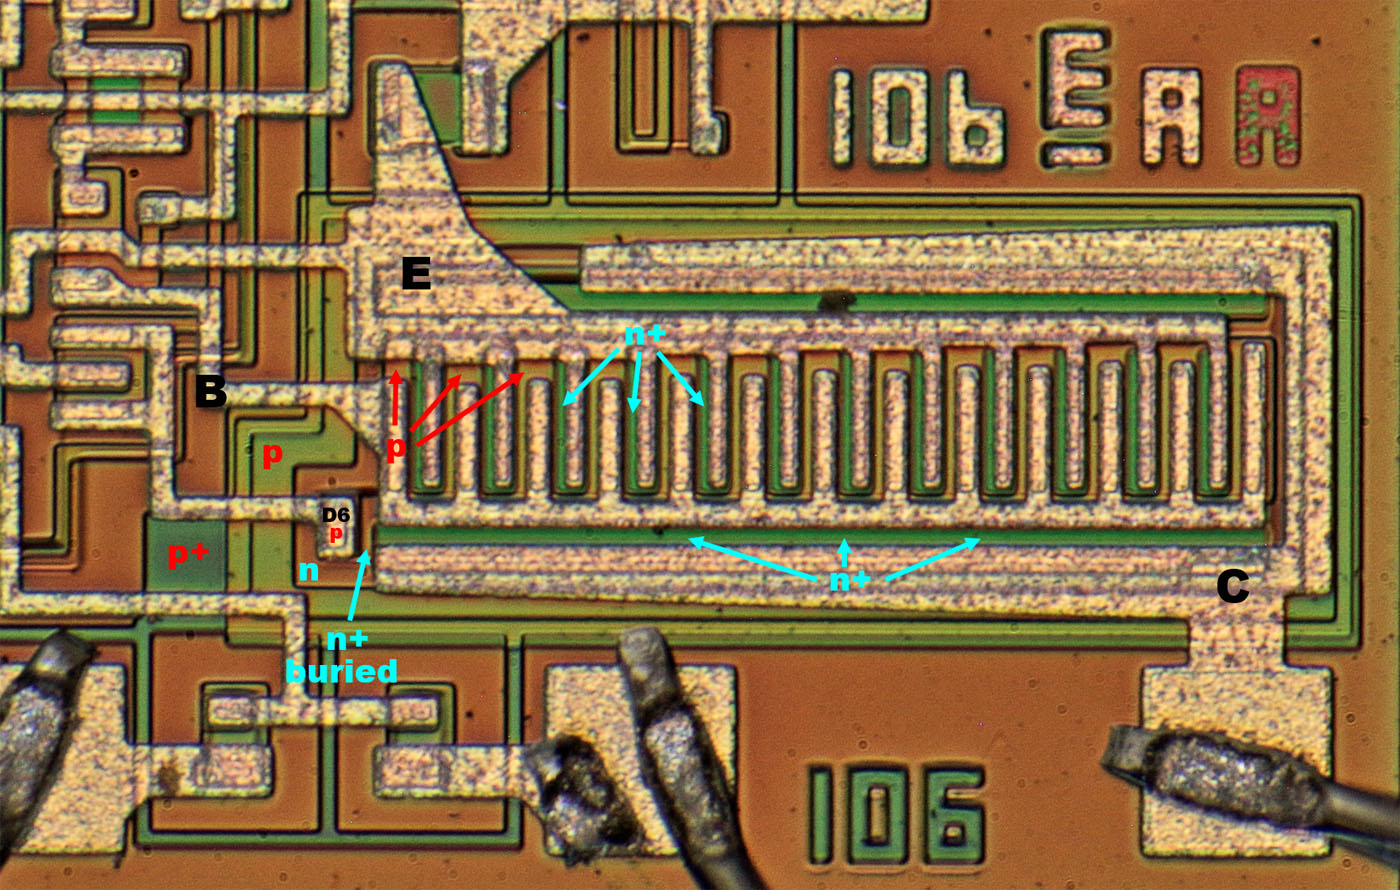 LM306H Die Detail Output Transistor